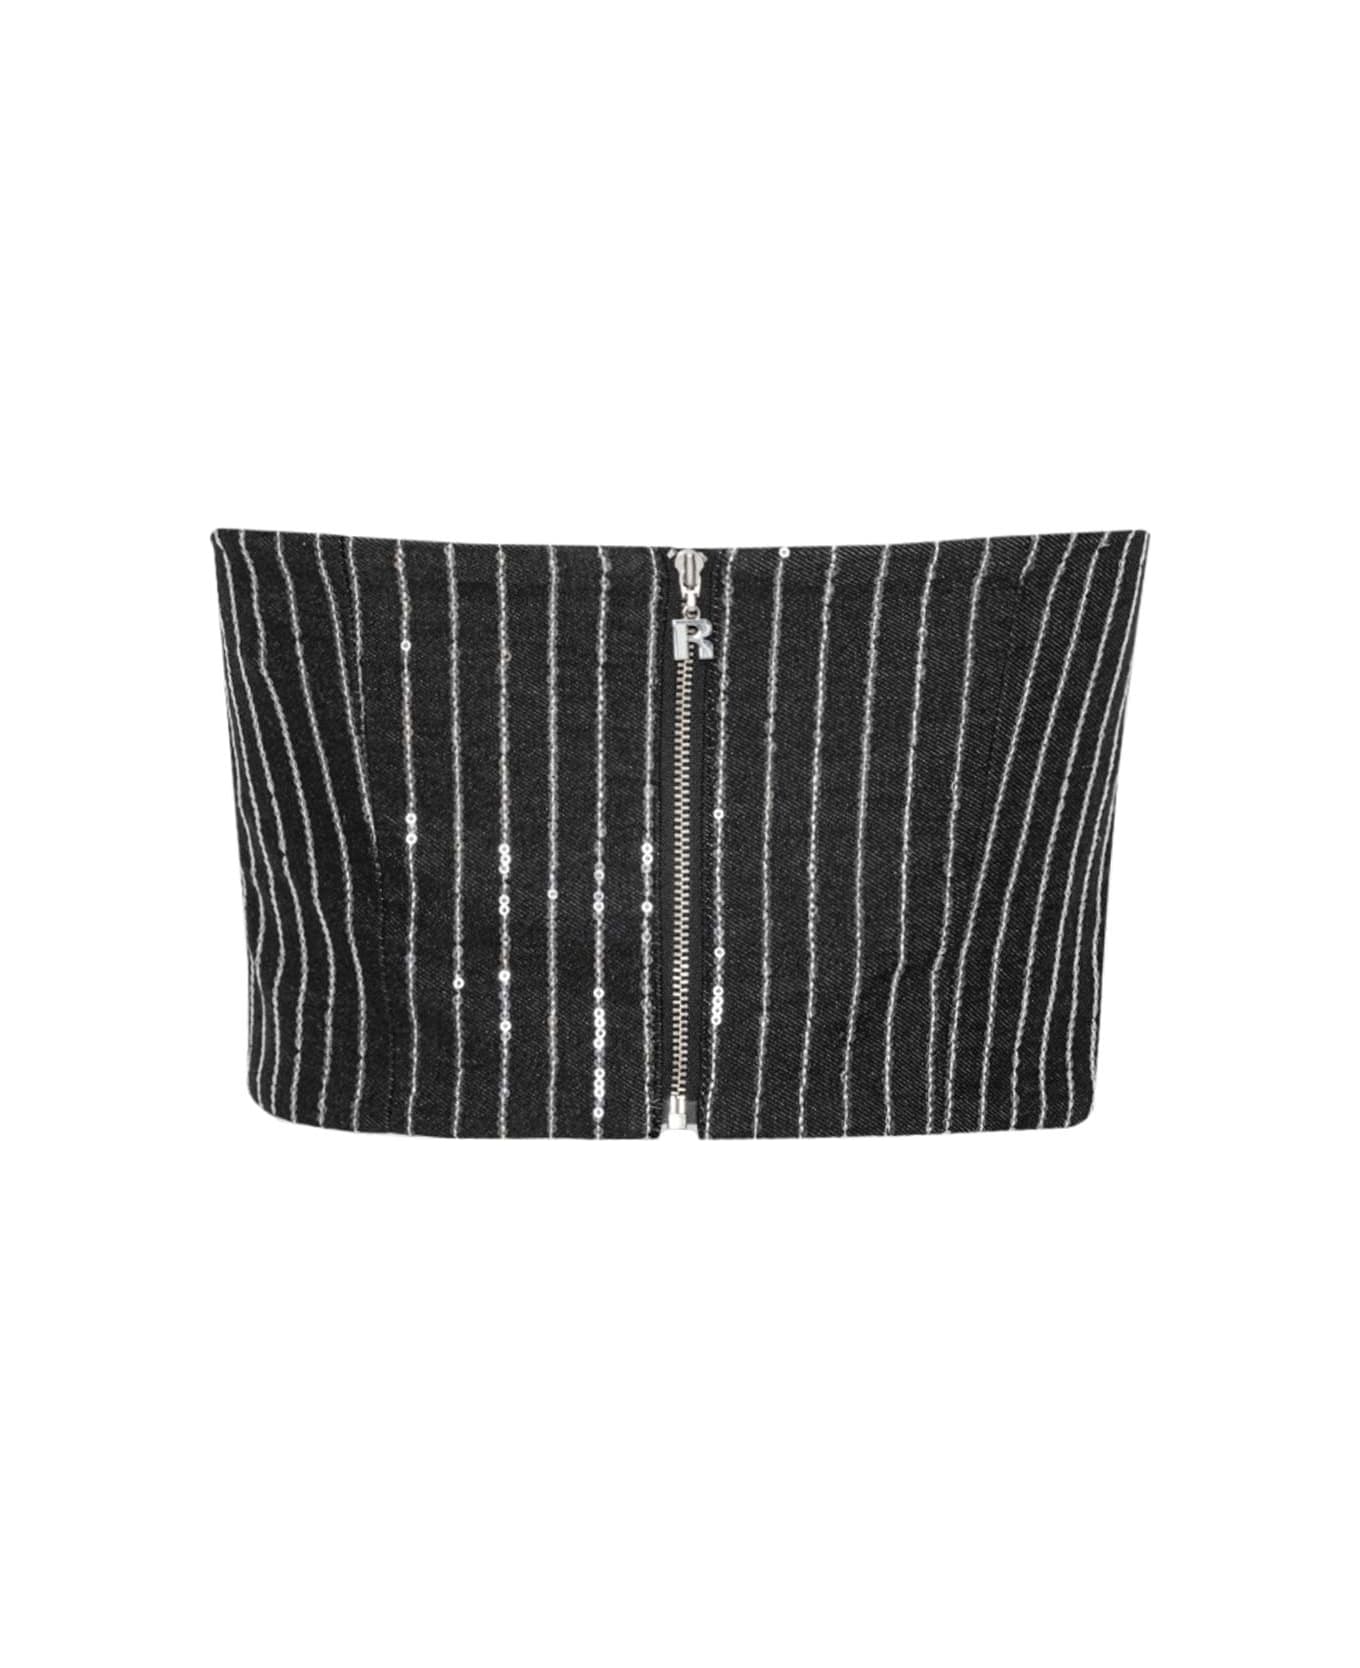 Rotate by Birger Christensen Crop Top With Sequins - Black